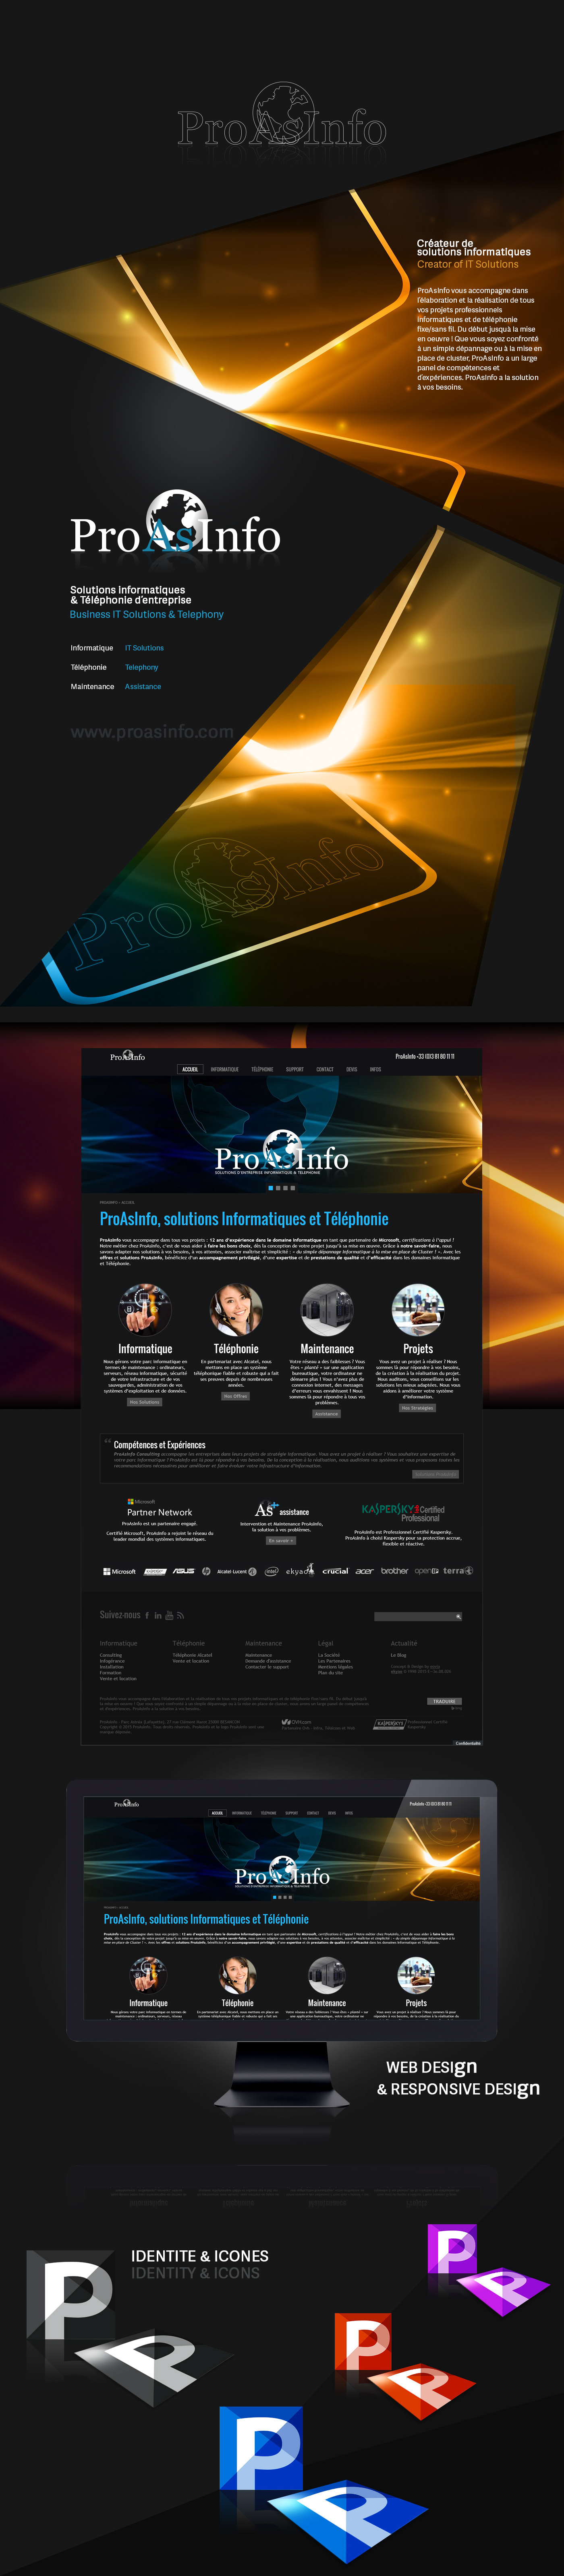 Adobe Portfolio proasinfo Behance portfolio logo ekyao proinfo Website Webdesign design Responsive agence communication Web presentation